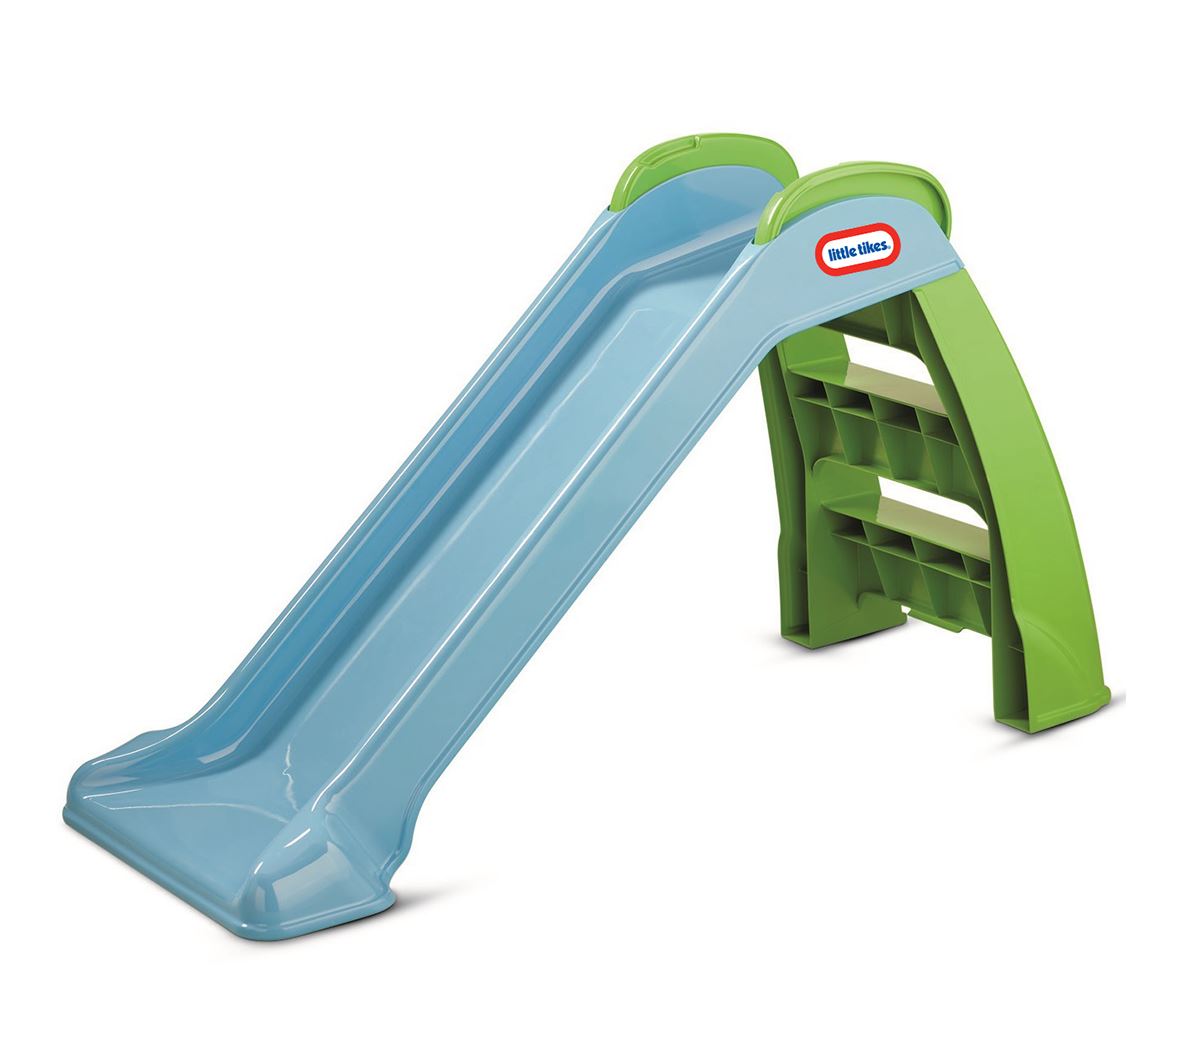 Little-Tikes-glijbaan-first-slide-70cm-hoog-blauw-groen